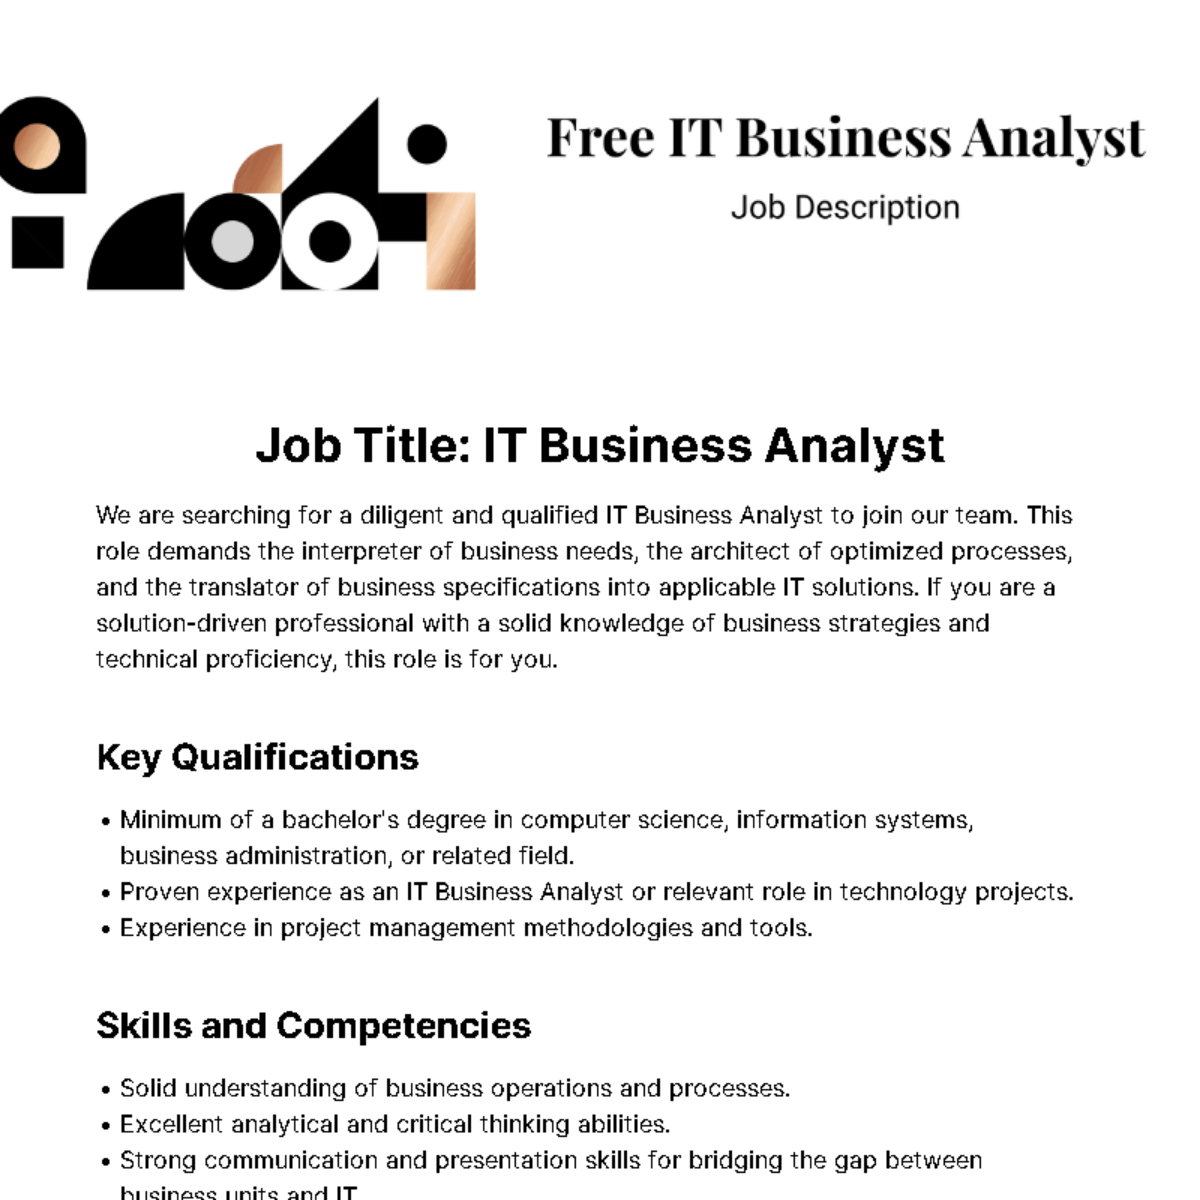 Free IT Business Analyst Job Description Template